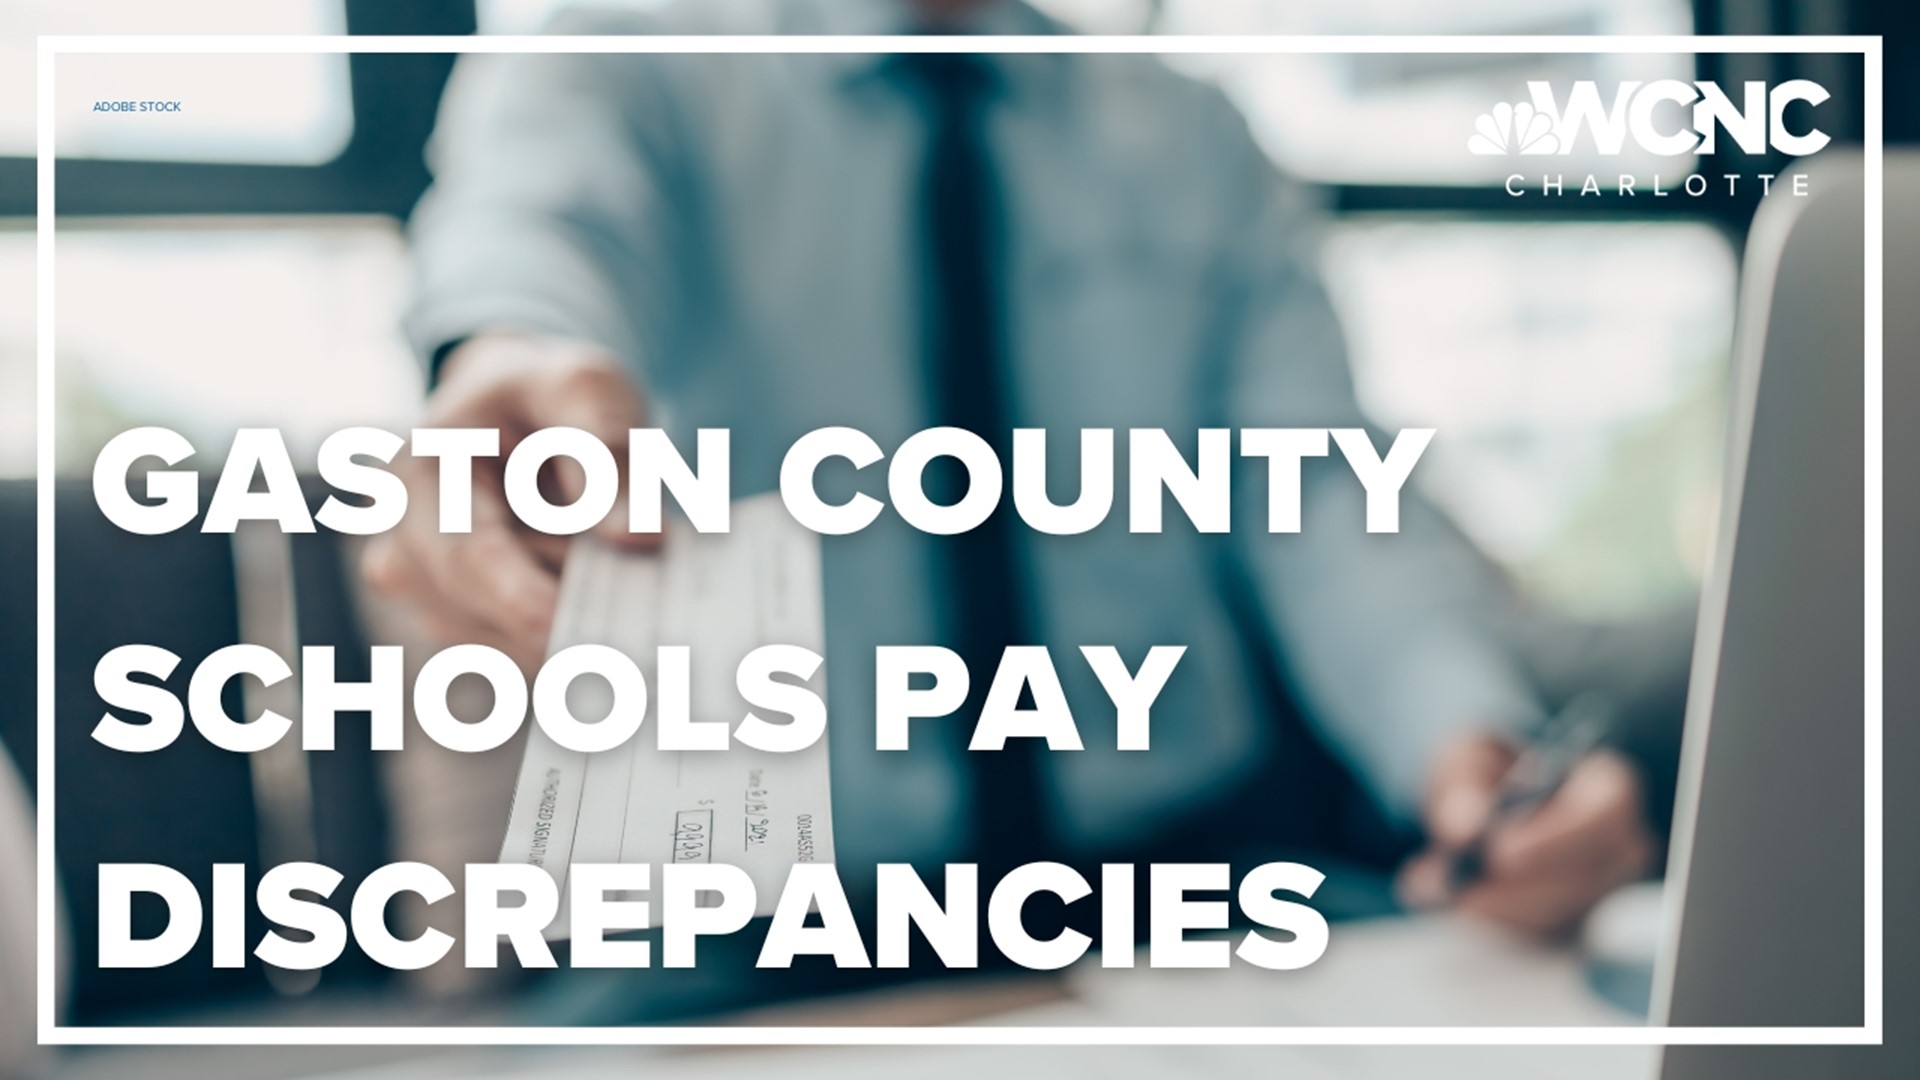 Some school employees found discrepancies in their paychecks.